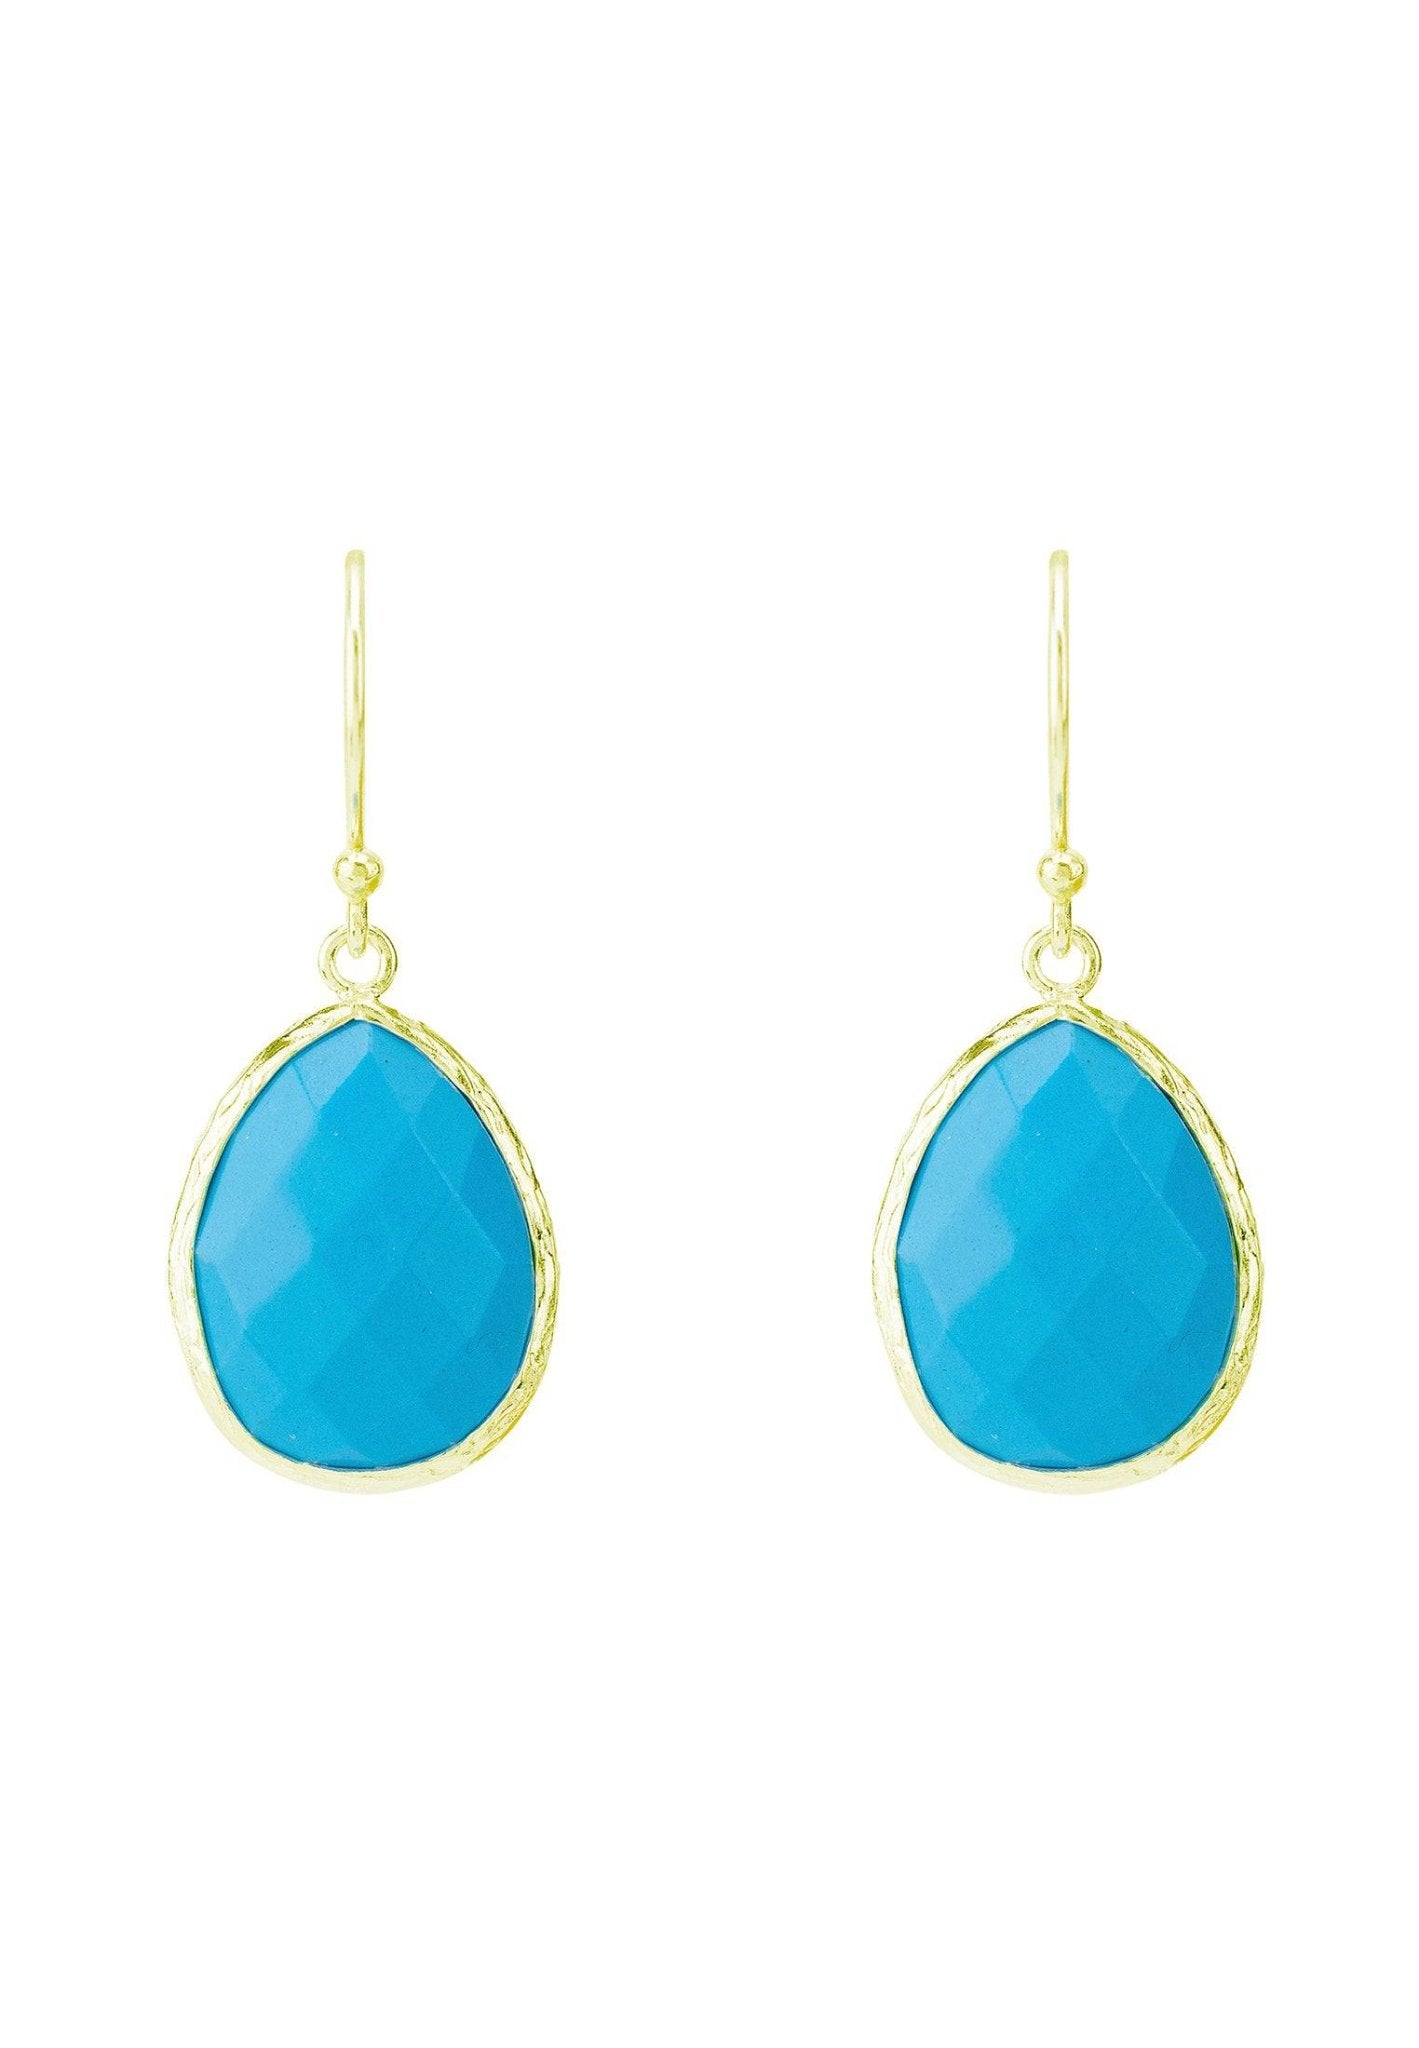 Petite Drop Earrings Turquoise Gold - LATELITA Earrings